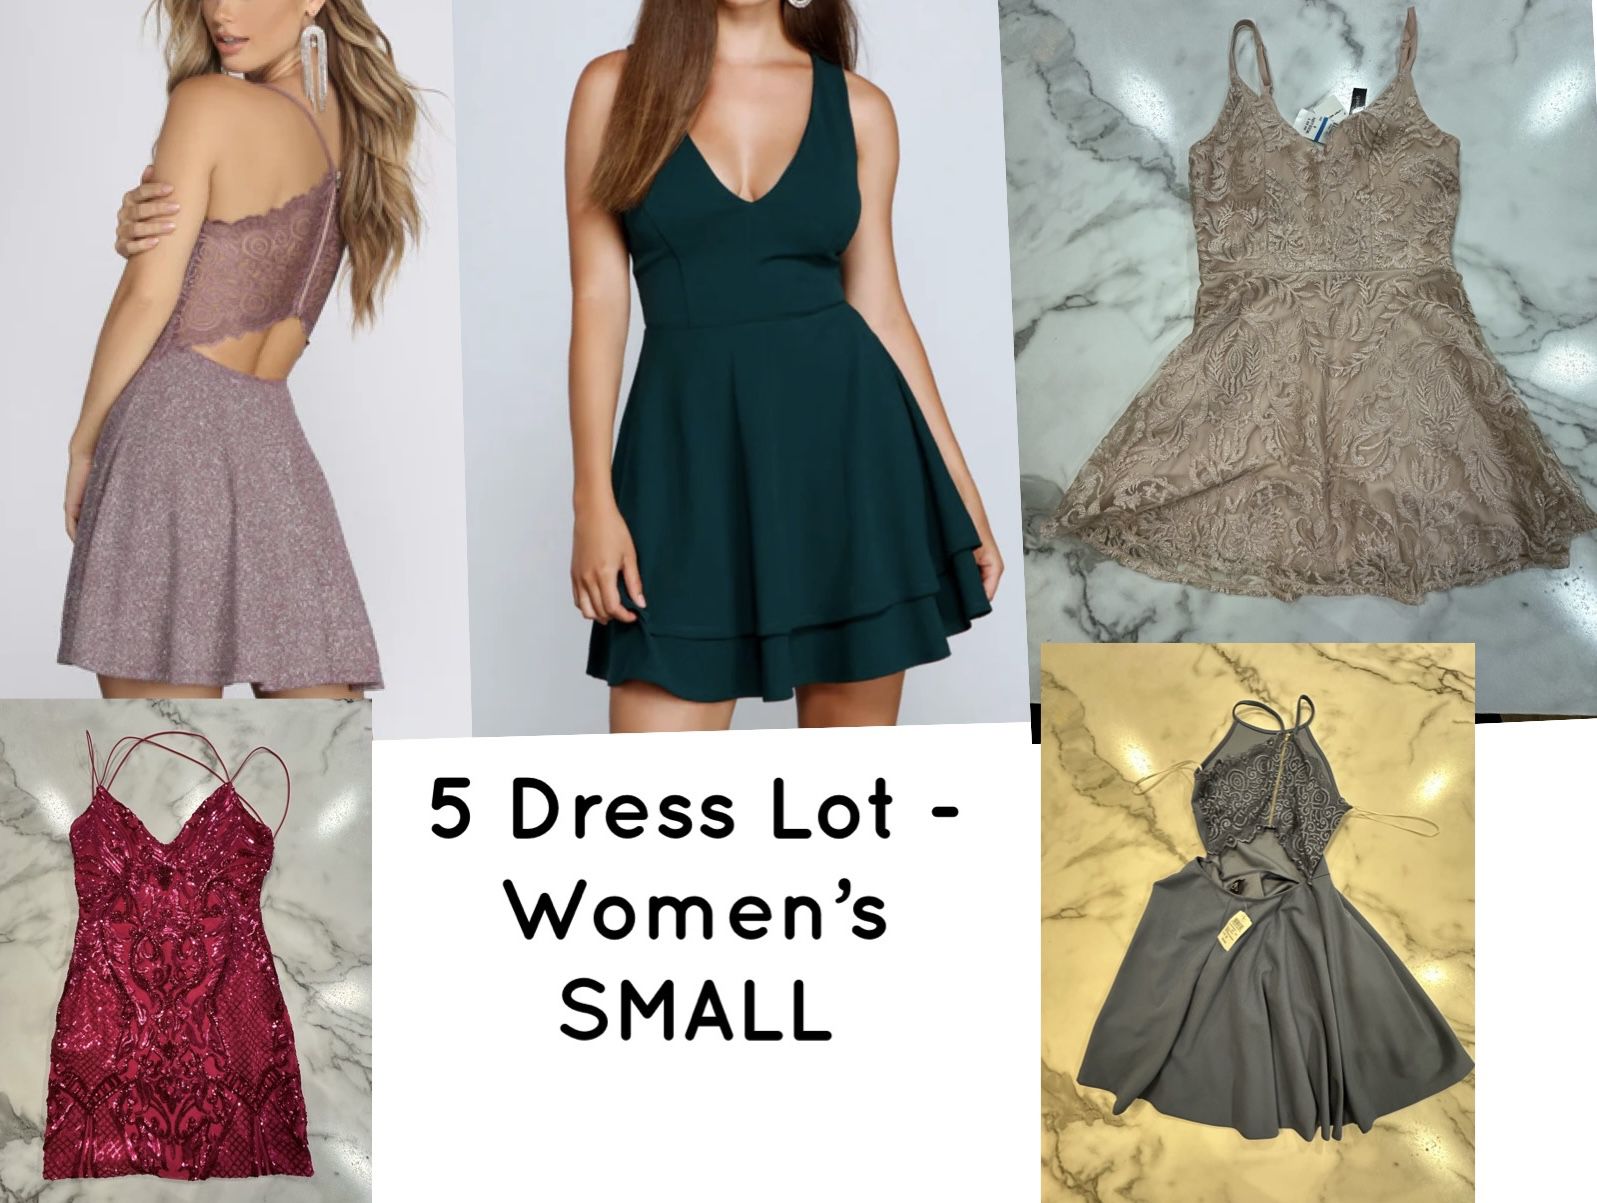 5 Dress Lot - 2 NWT/3 EUC - Windsor / Women’s SMALL 